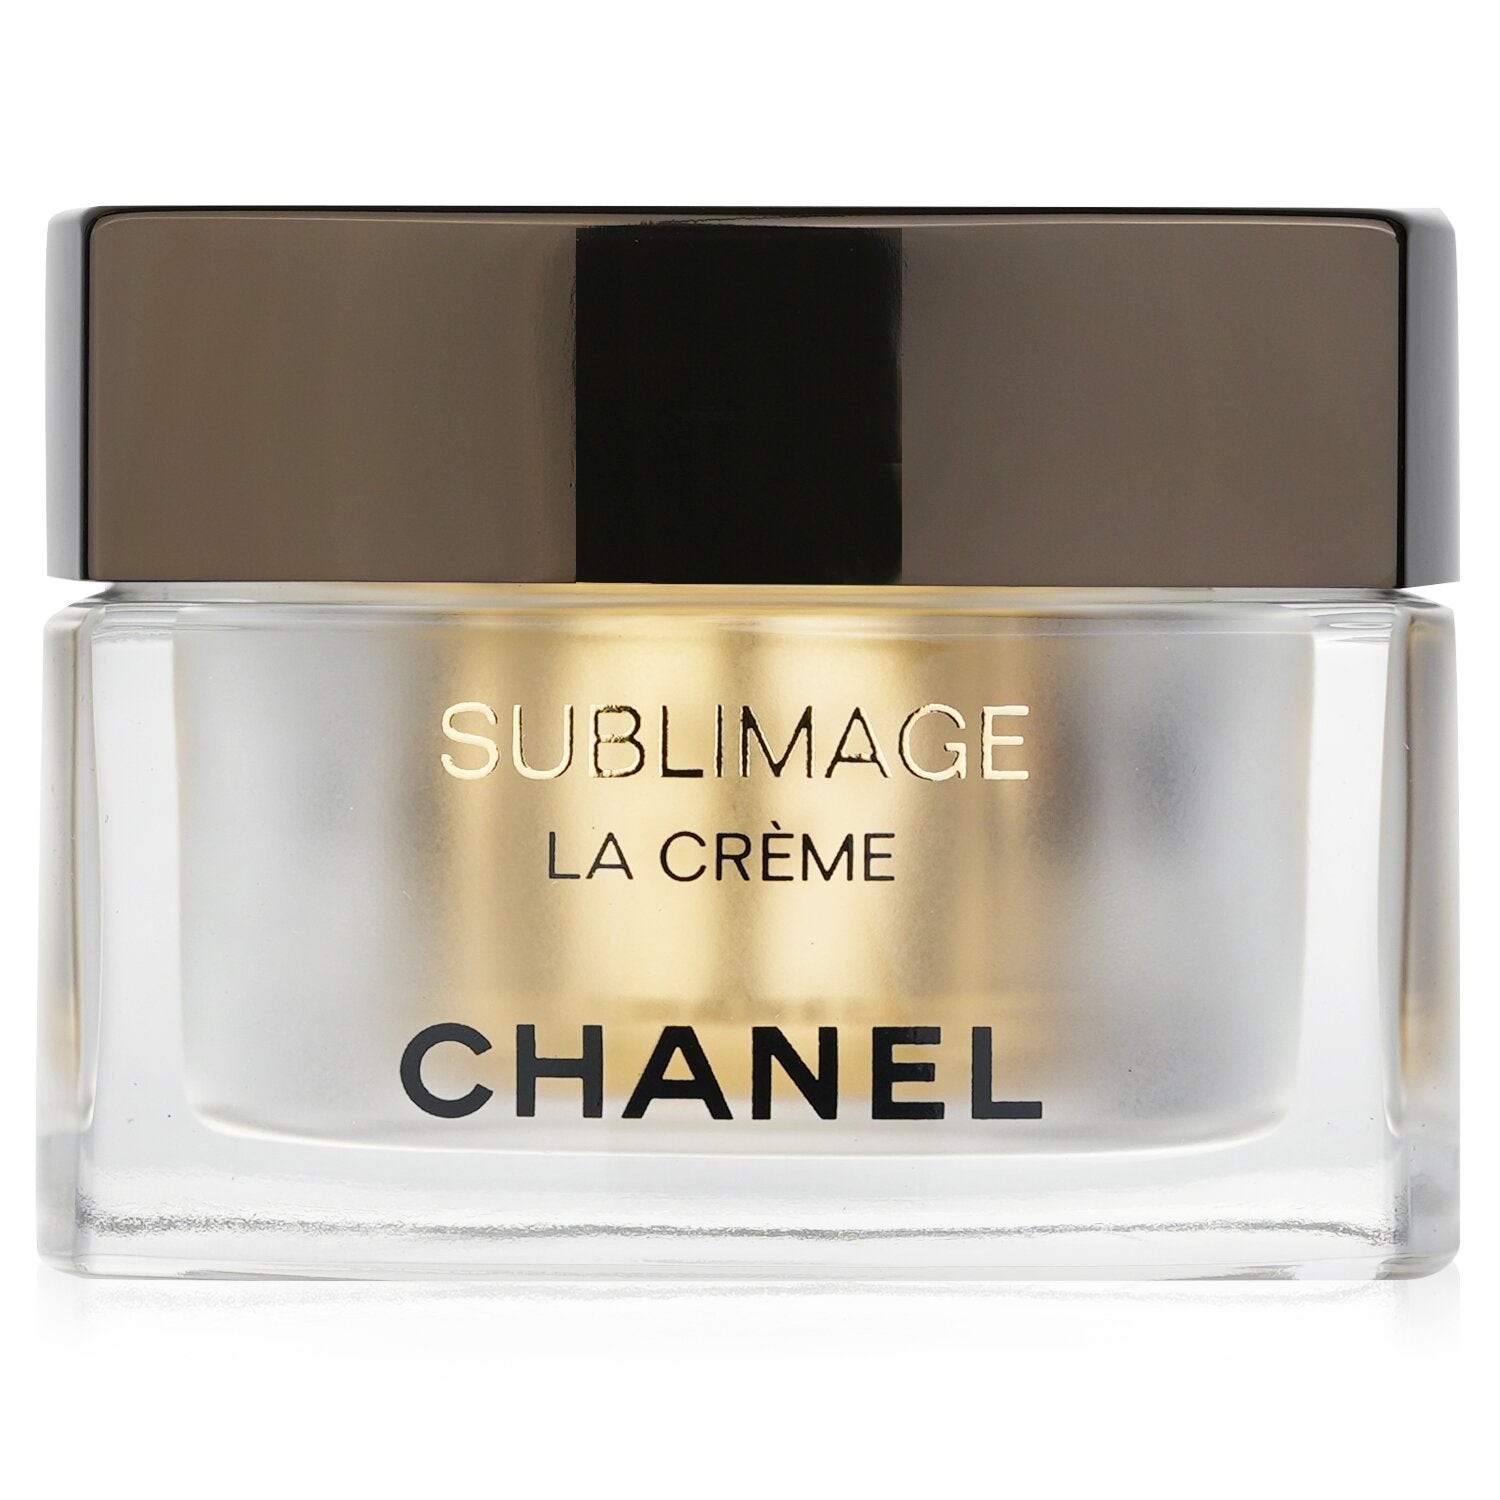 Chanel Sublimage La Creme Texture Fine Ultimate Cream 50g/1.7oz -  Moisturizers & Treatments, Free Worldwide Shipping